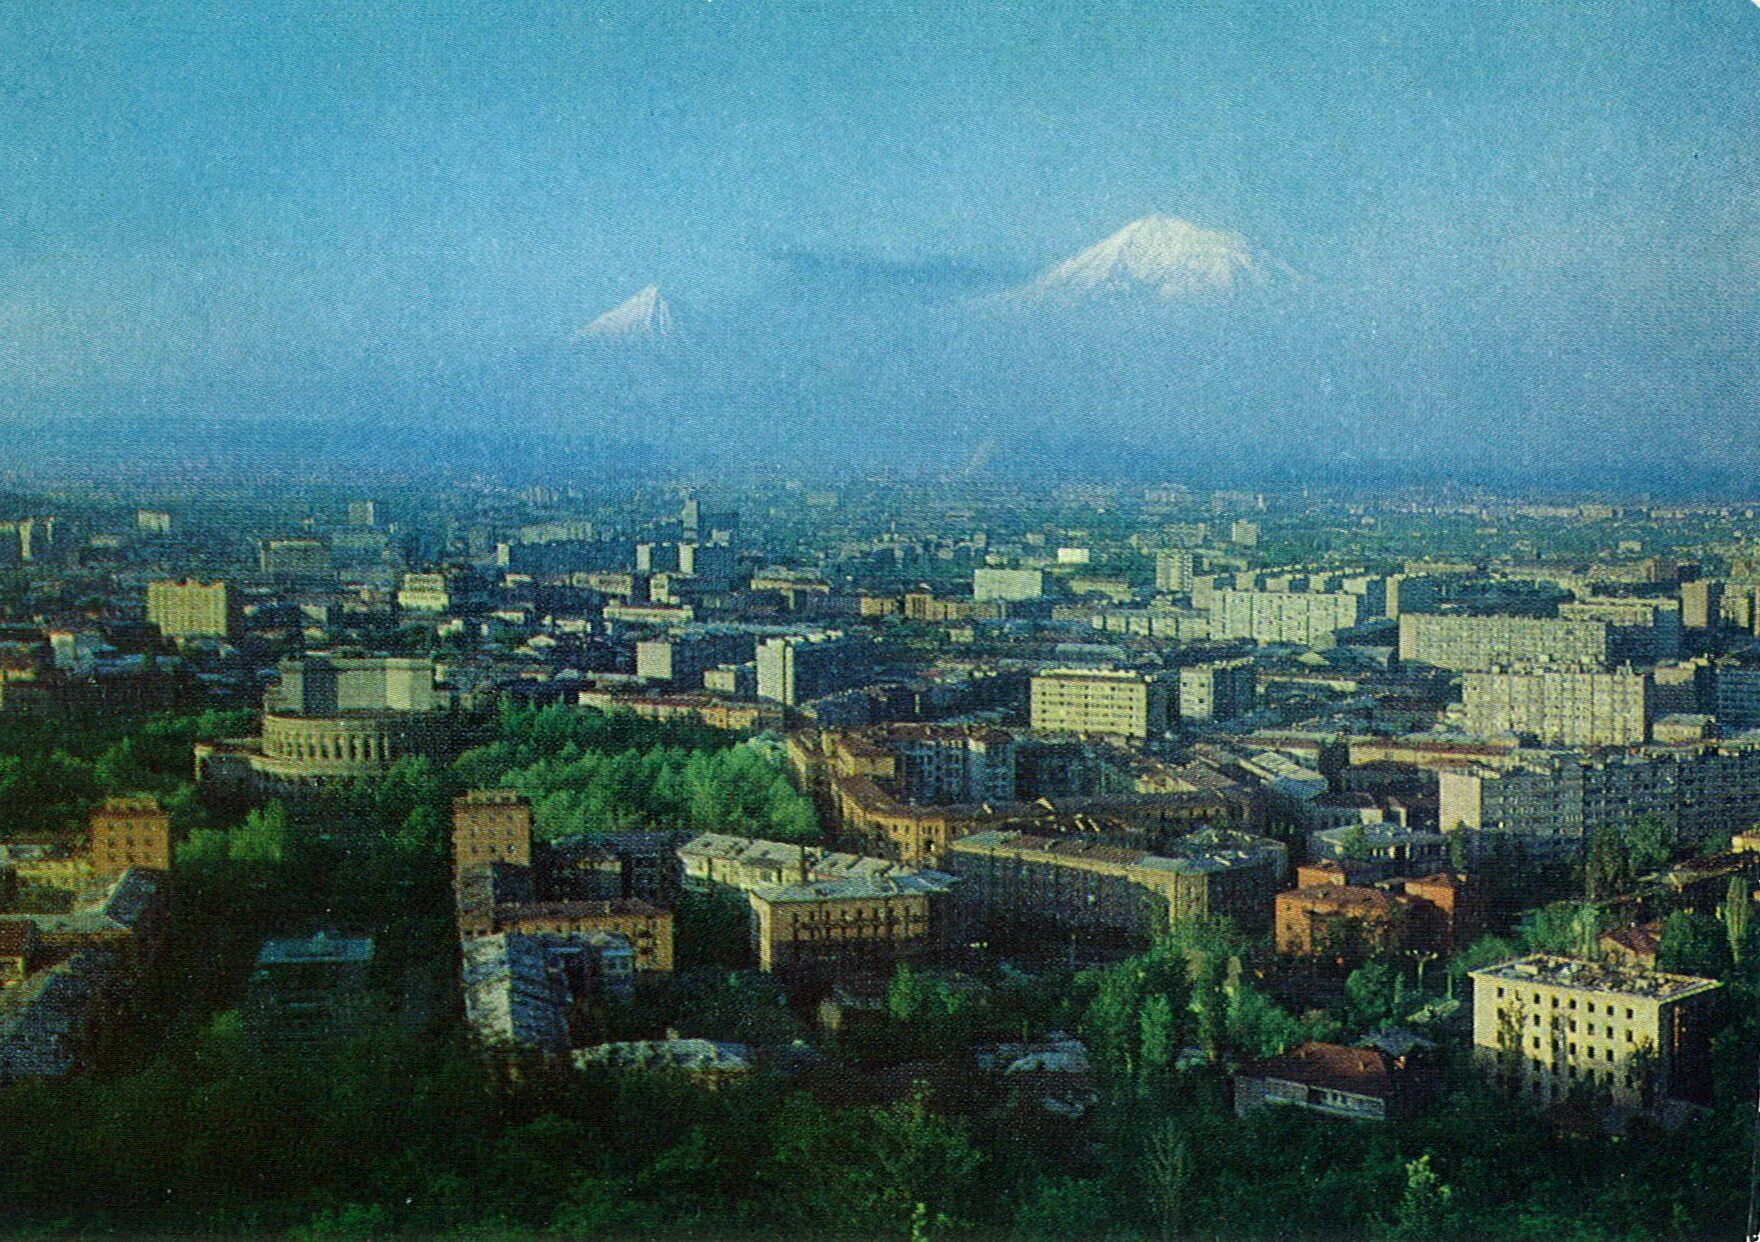 Ереван раньше. Ереван Армения 70е. Ереван 1978. Ереван - столица Советской Армении (1980). Ереван 70-е.